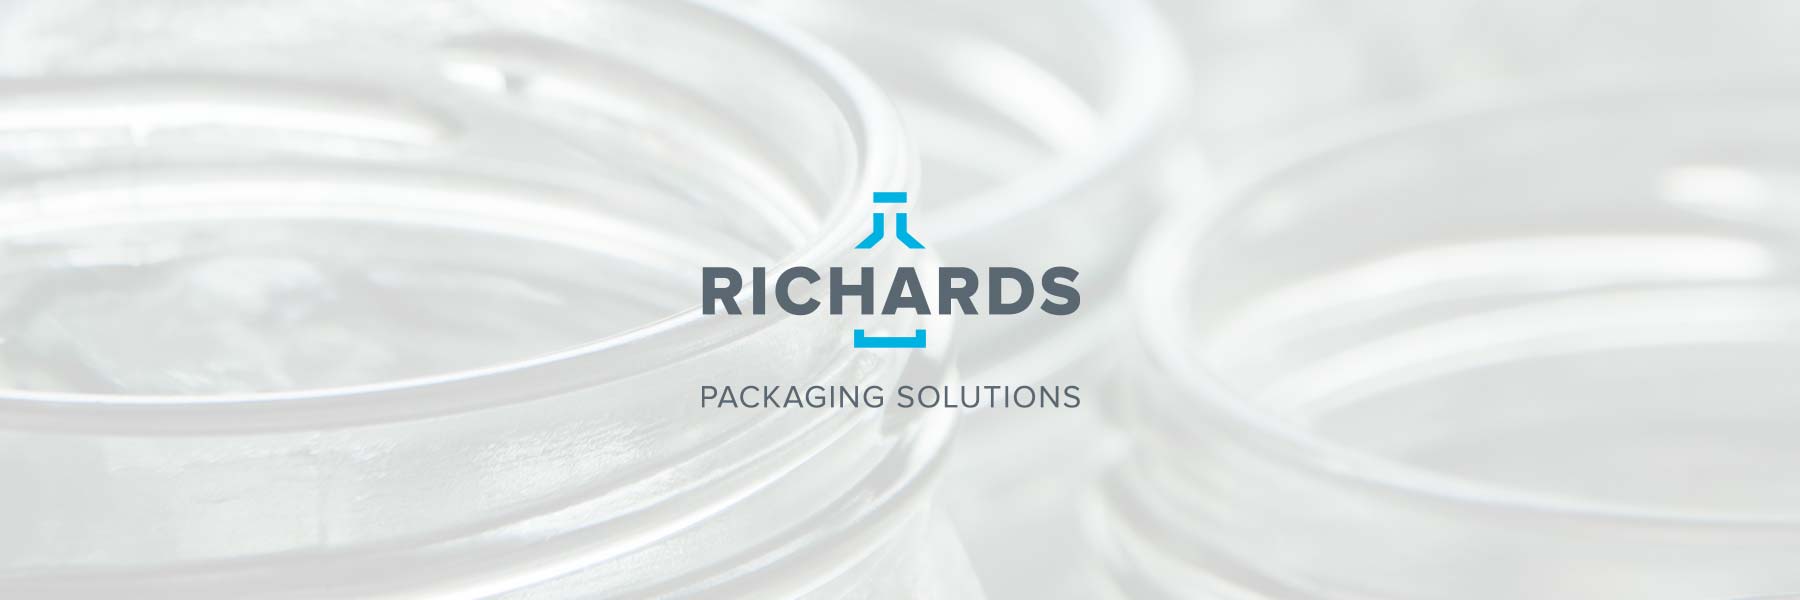 Richards Packaging Solutions-Entete Portfolio